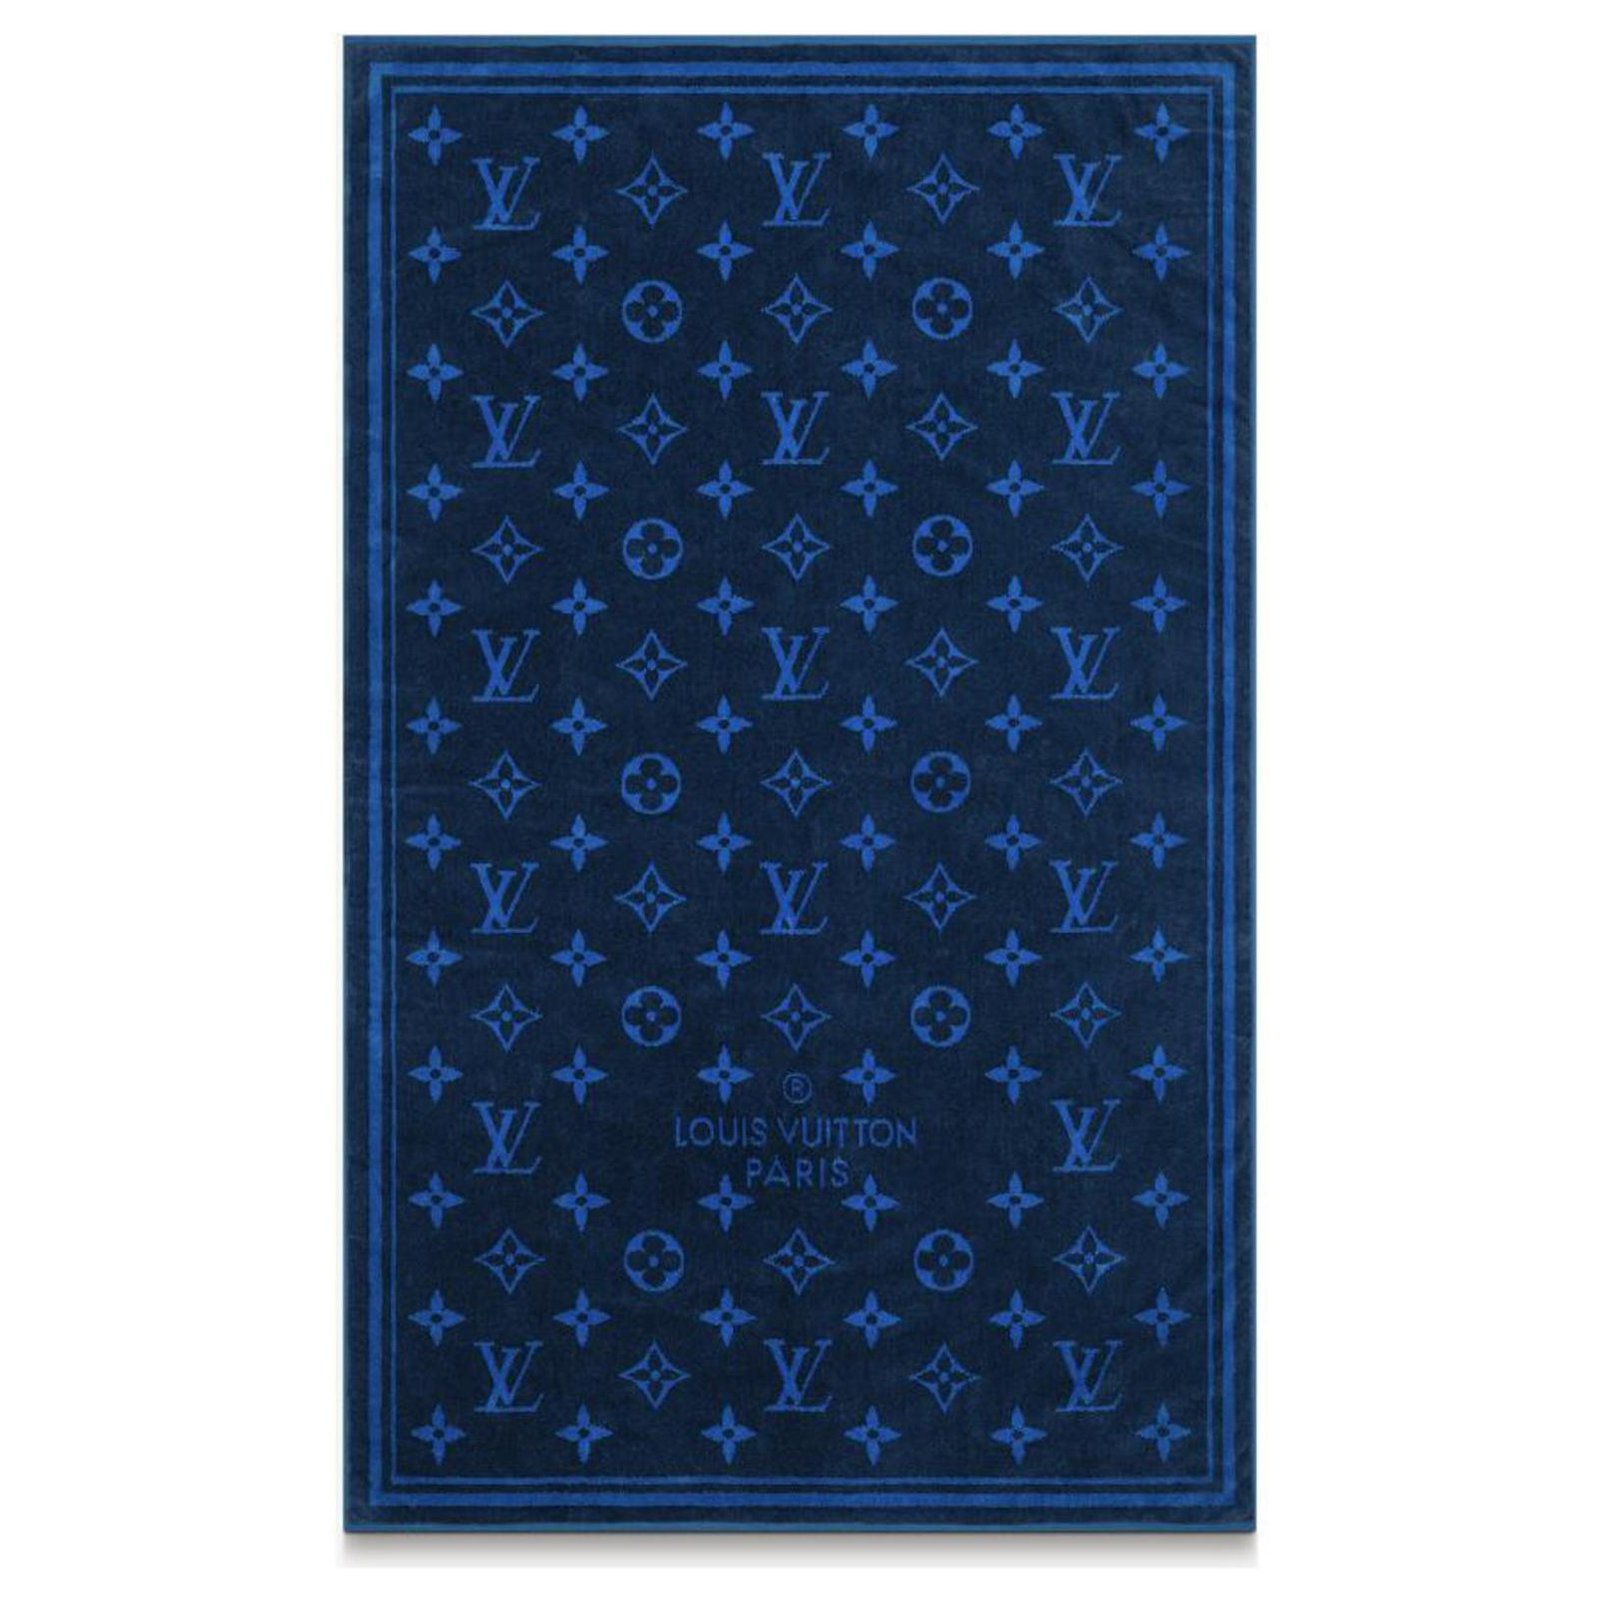 Louis Vuitton LVacation Beach Pillow Navy Blue in Cotton - US